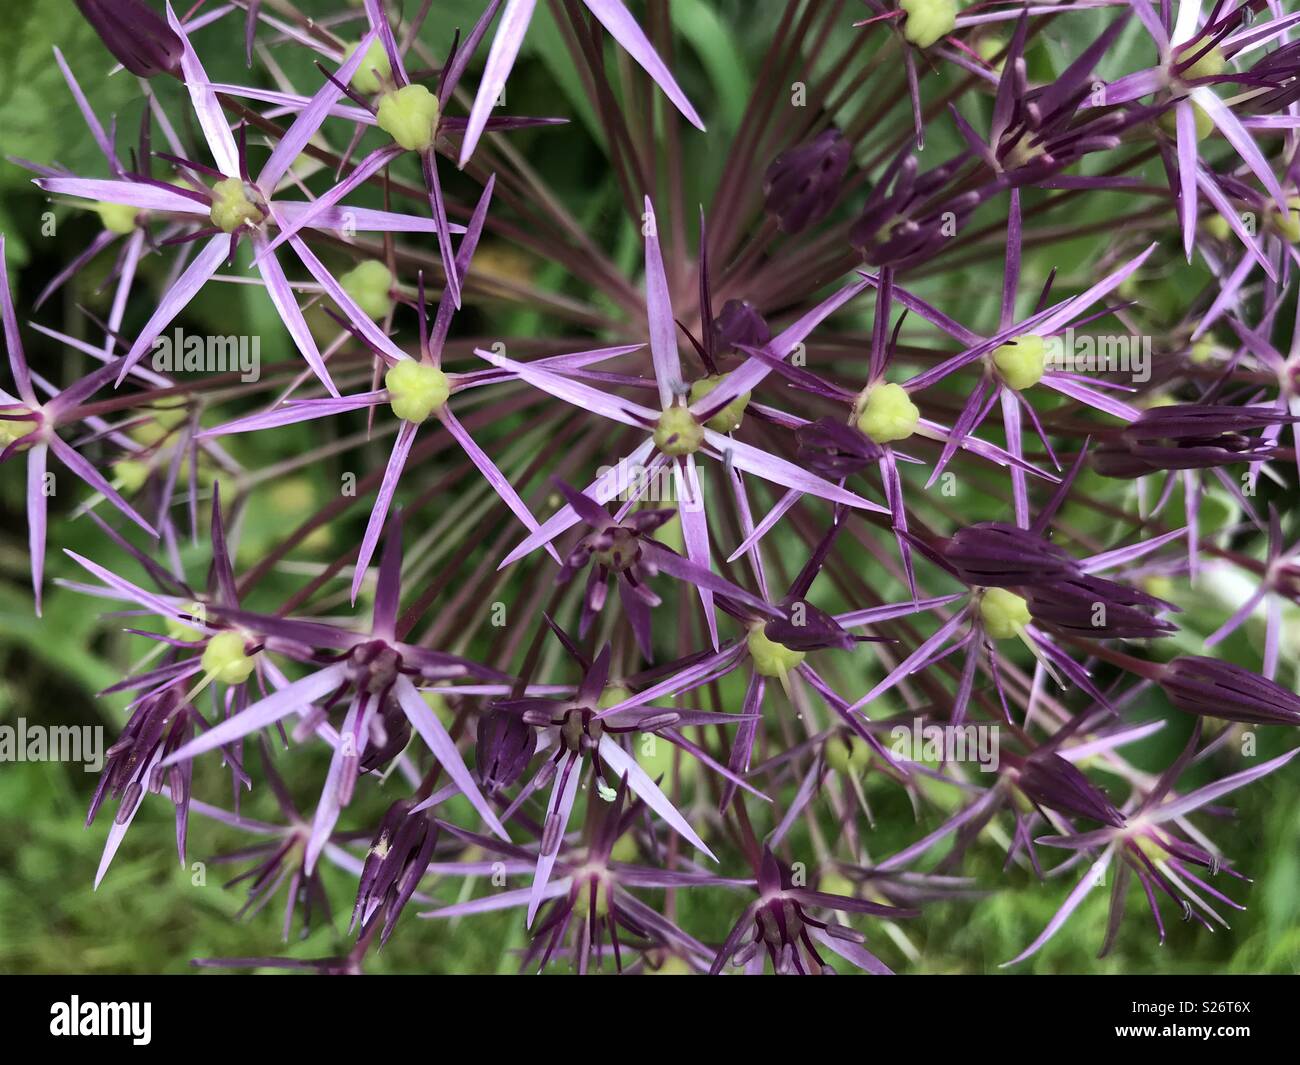 Close up of an Alium flower Stock Photo